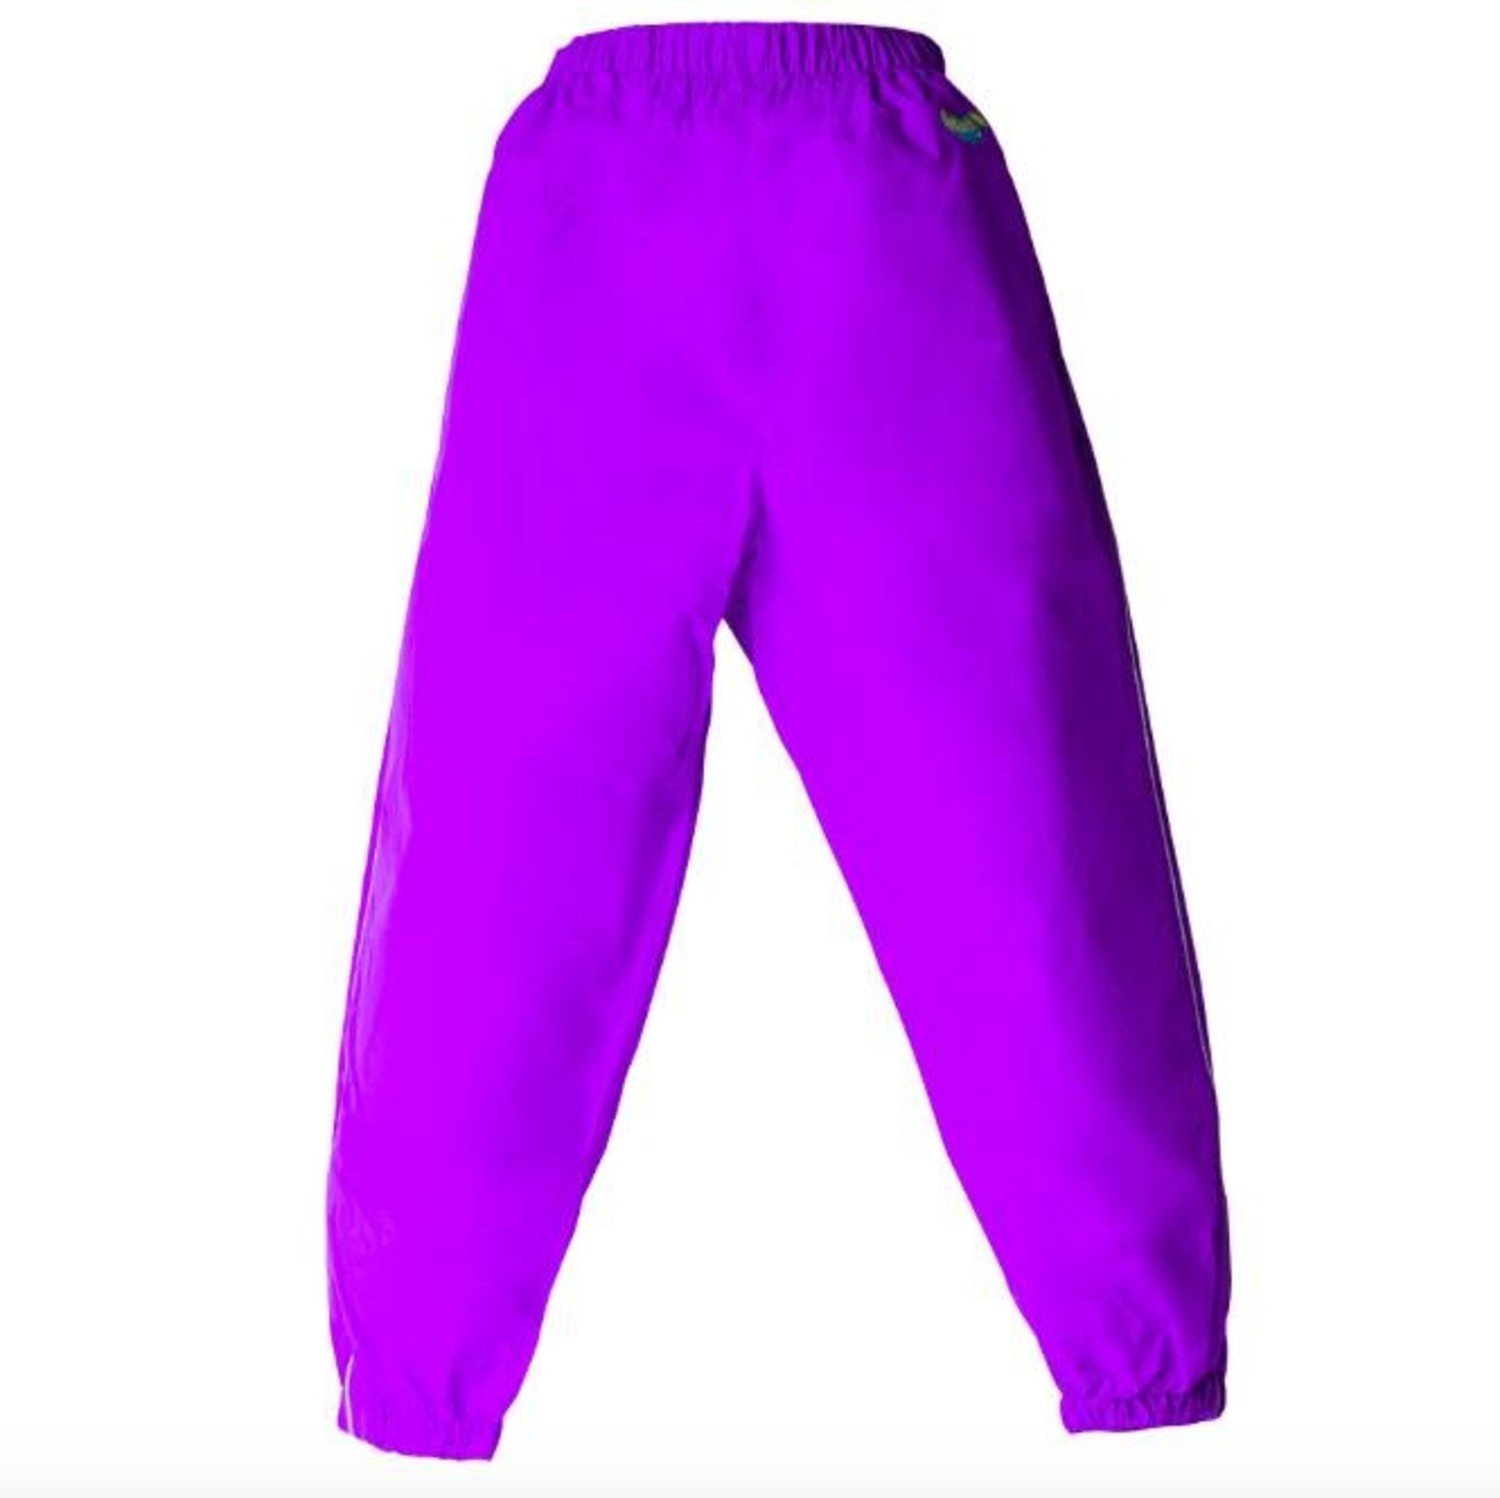 https://cdn.shoplightspeed.com/shops/622329/files/15134921/1500x4000x3/j-k-splashy-splash-pants-purple.jpg